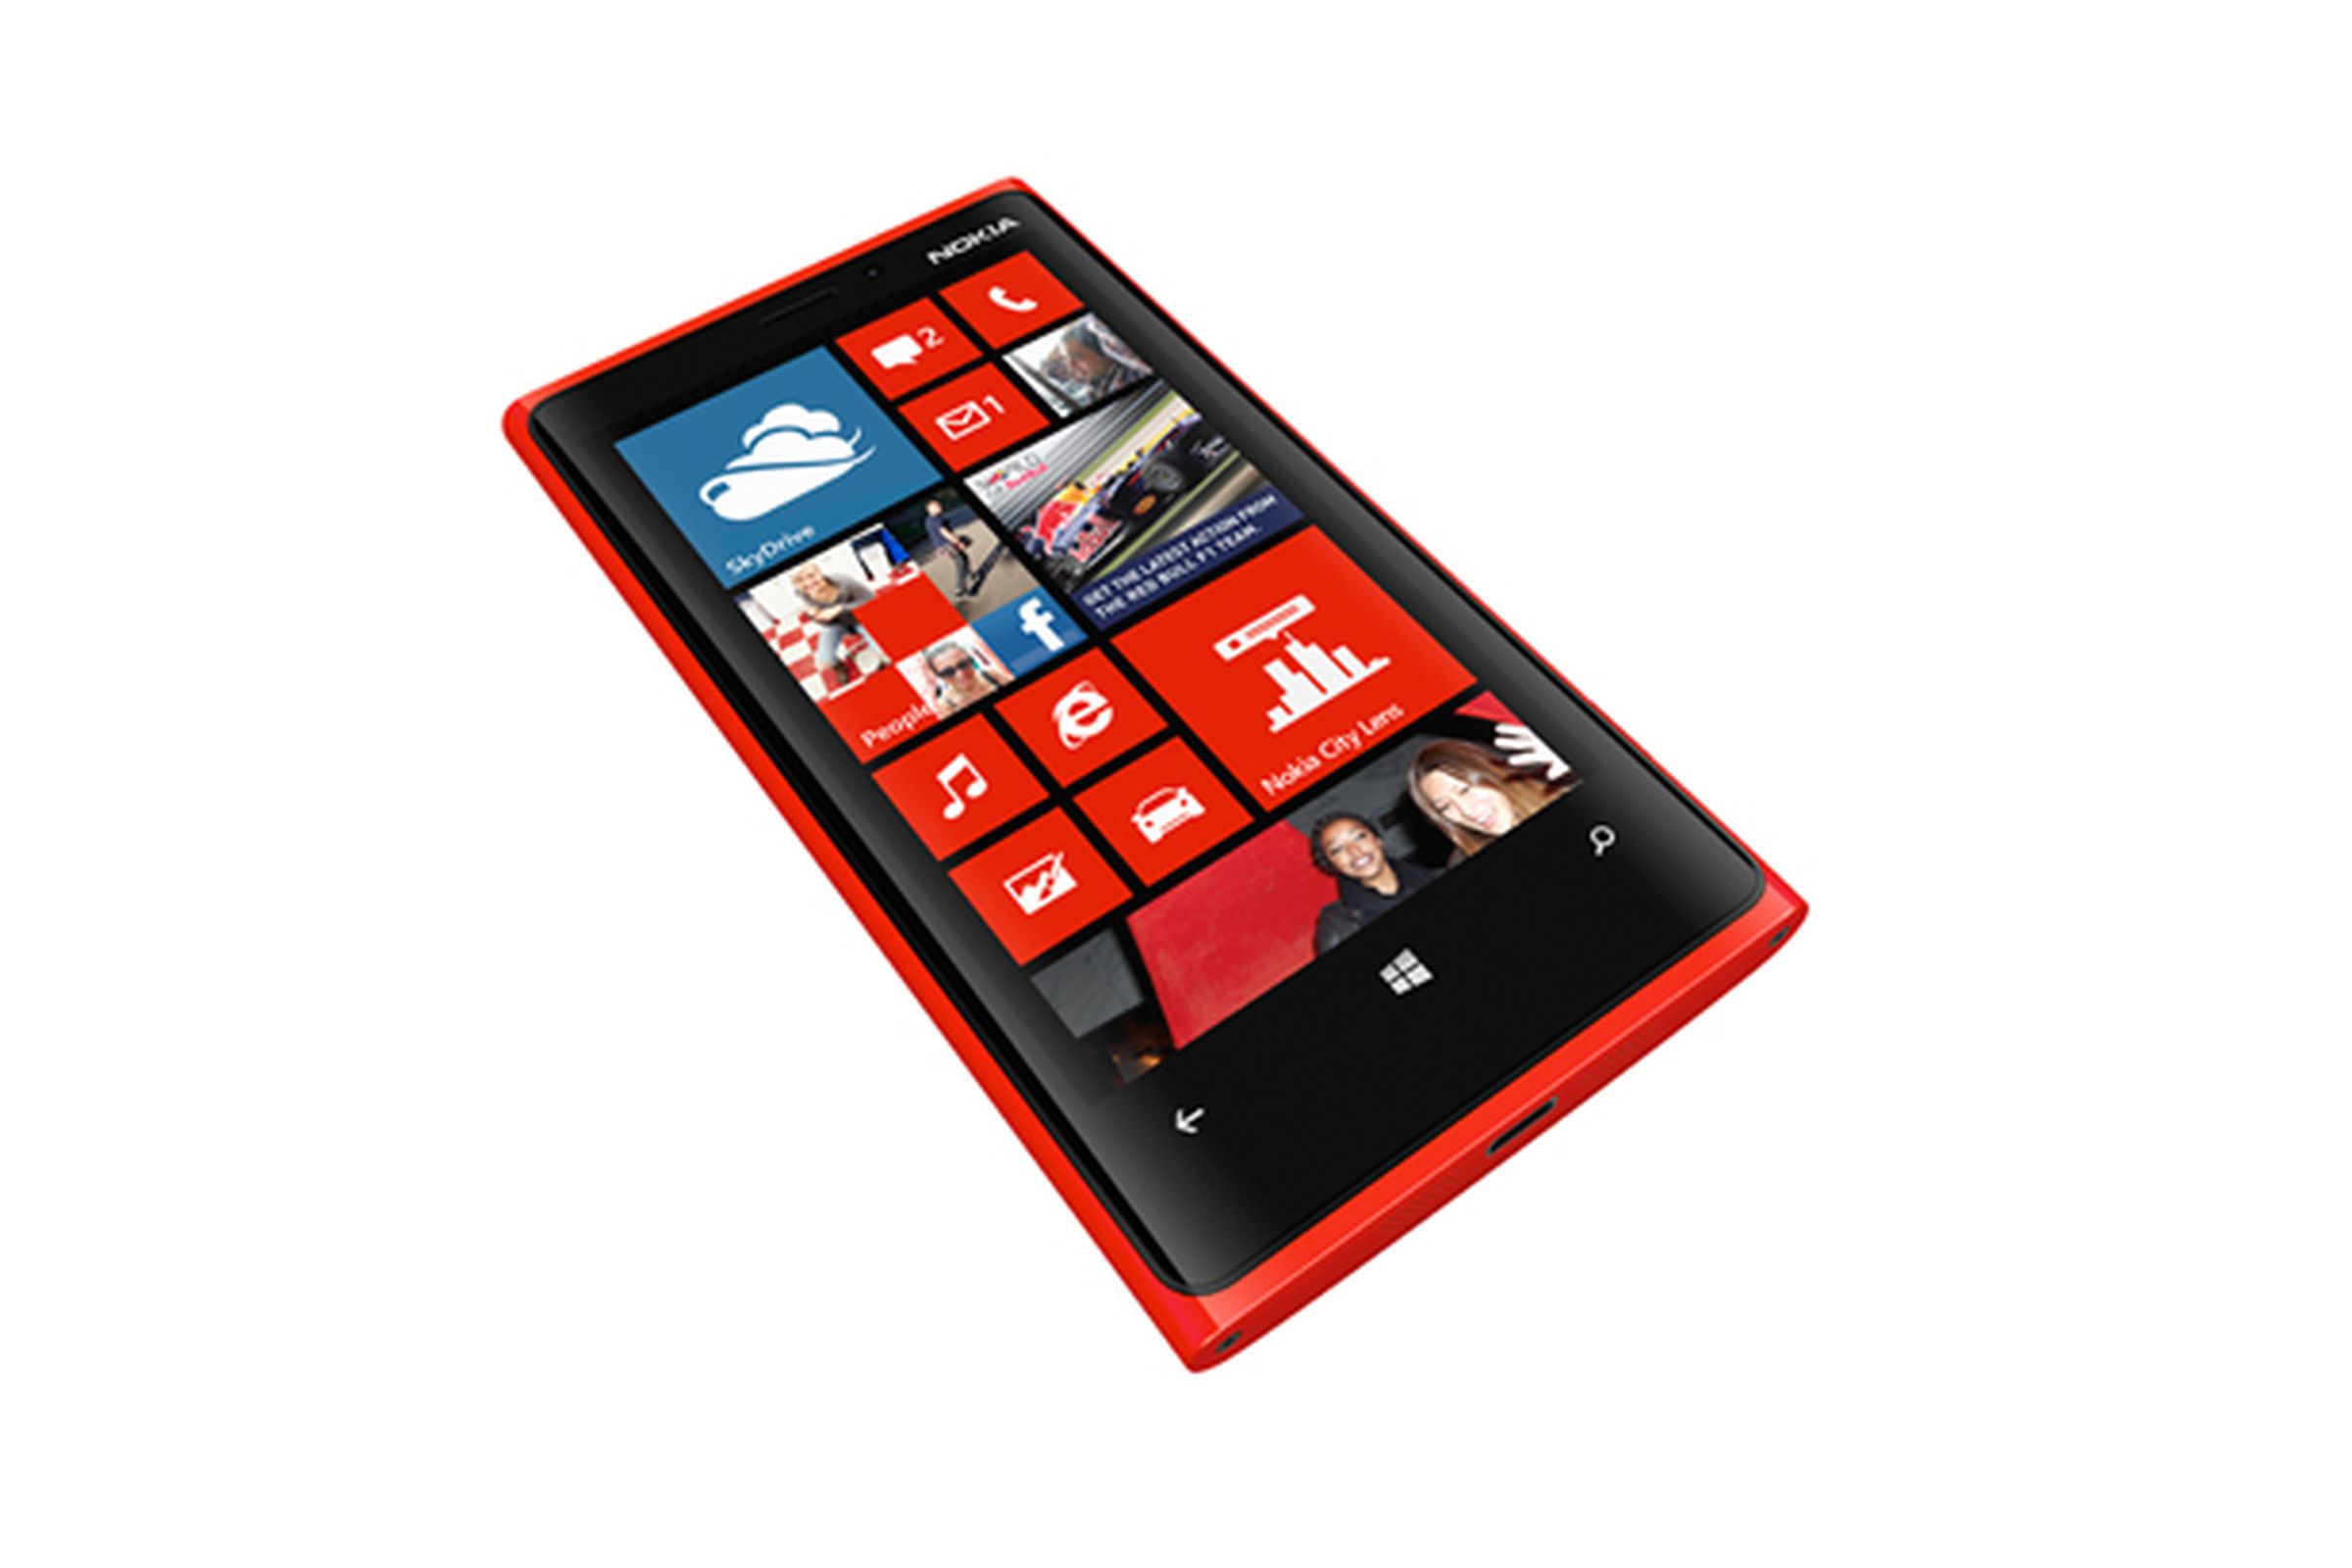 Nokia Lumia 920 official